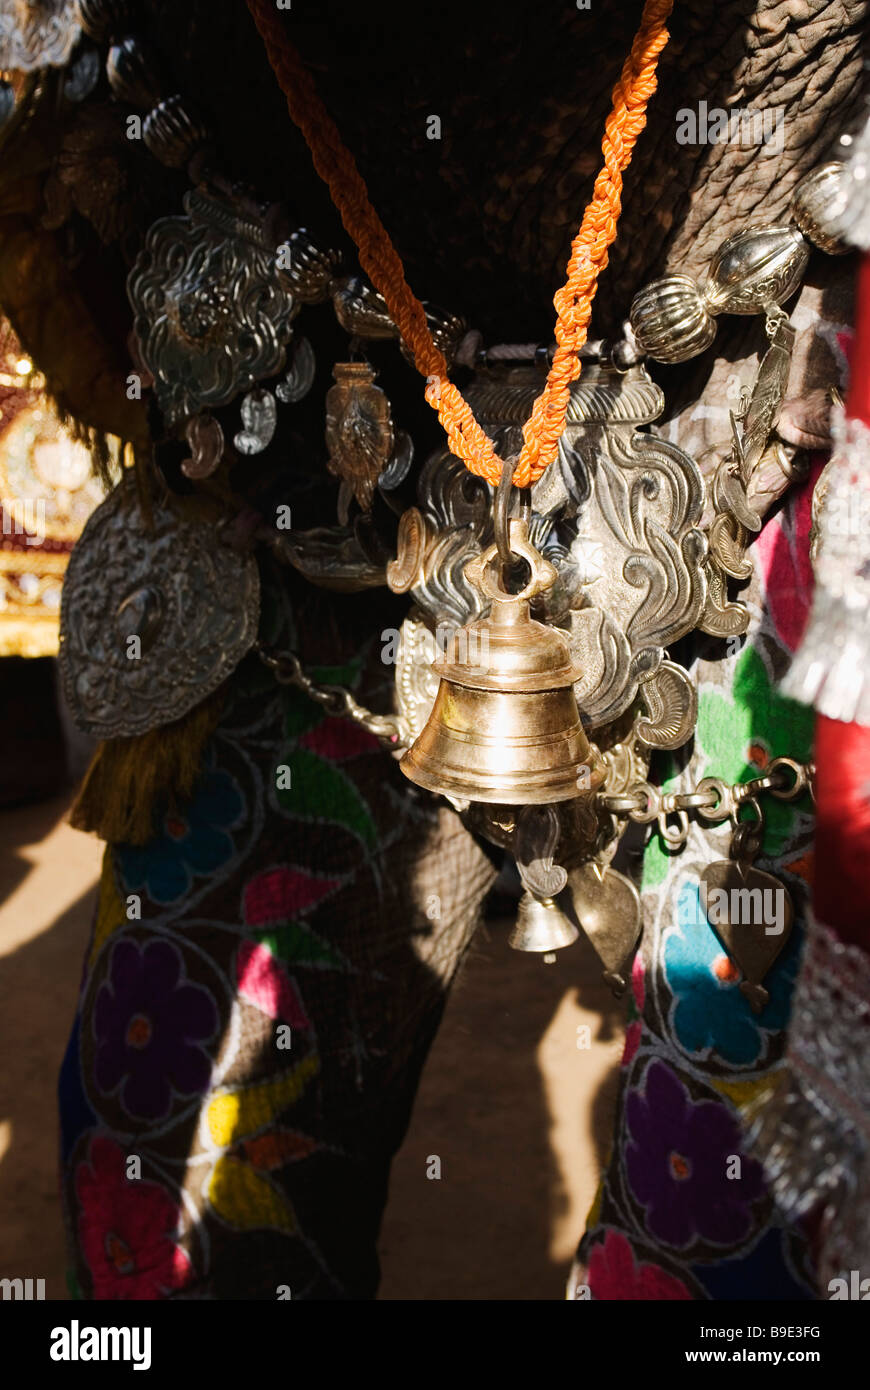 Bell hanging on an elephant's neck, Elephant Festival, Jaipur, Rajasthan, India Stock Photo